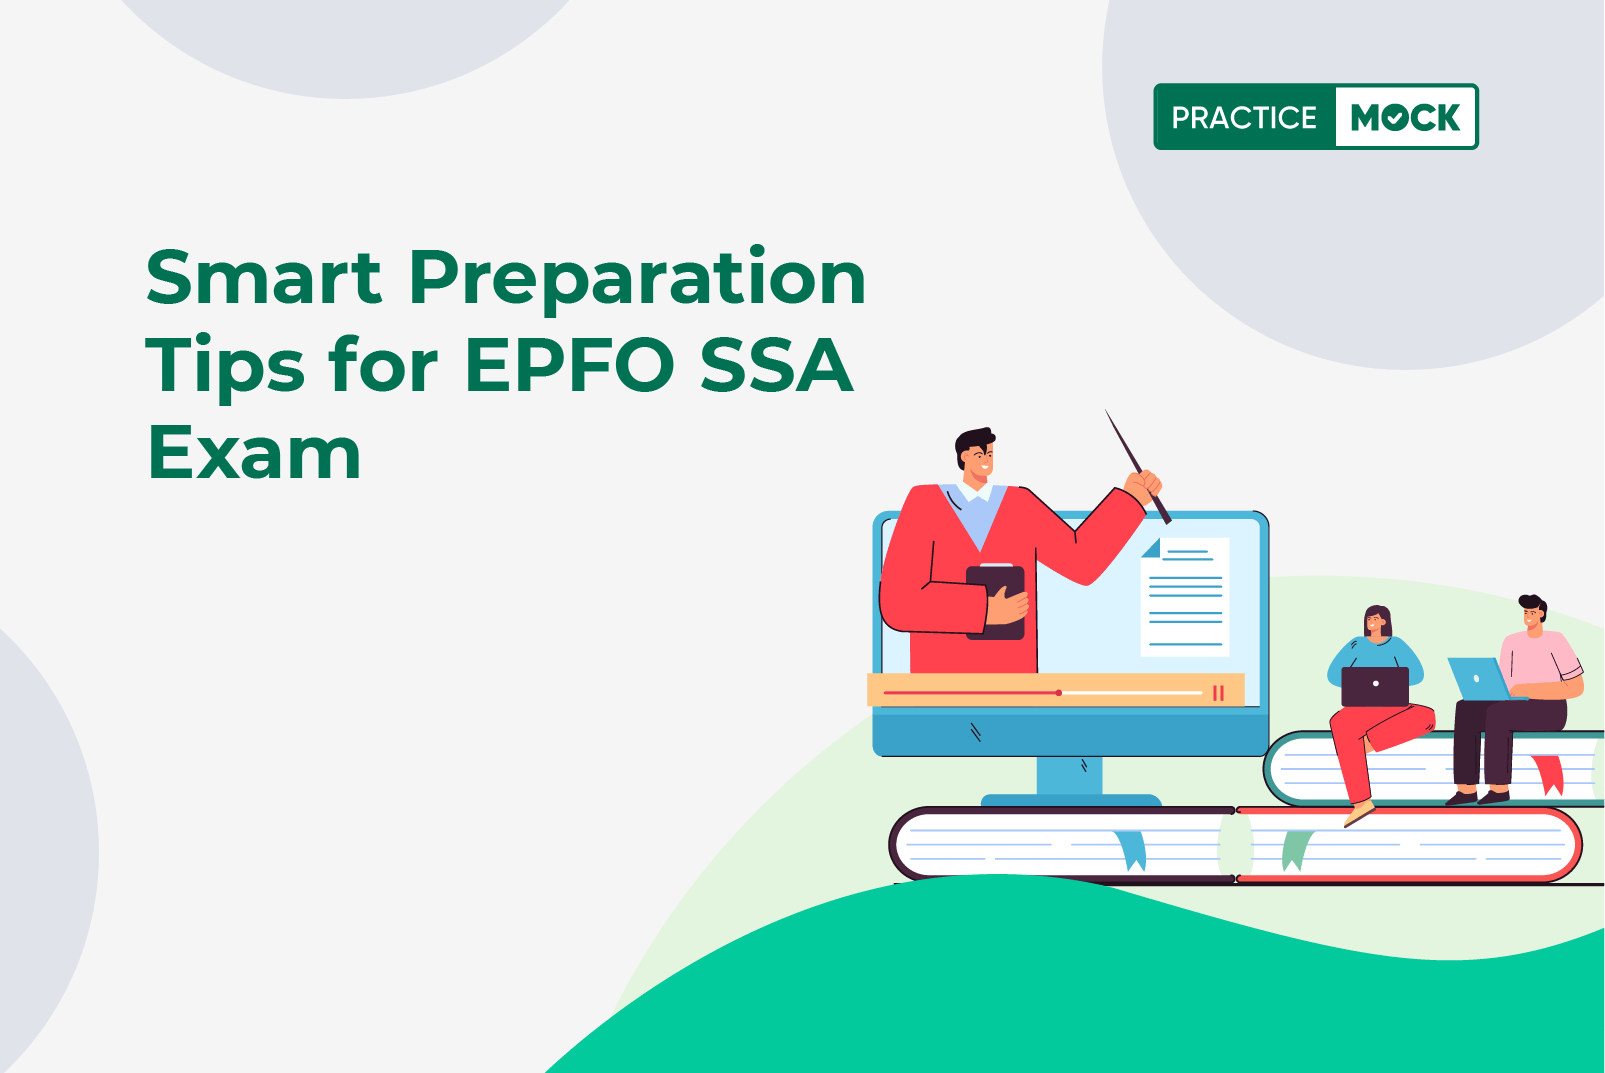 EPFO SSA Preparation